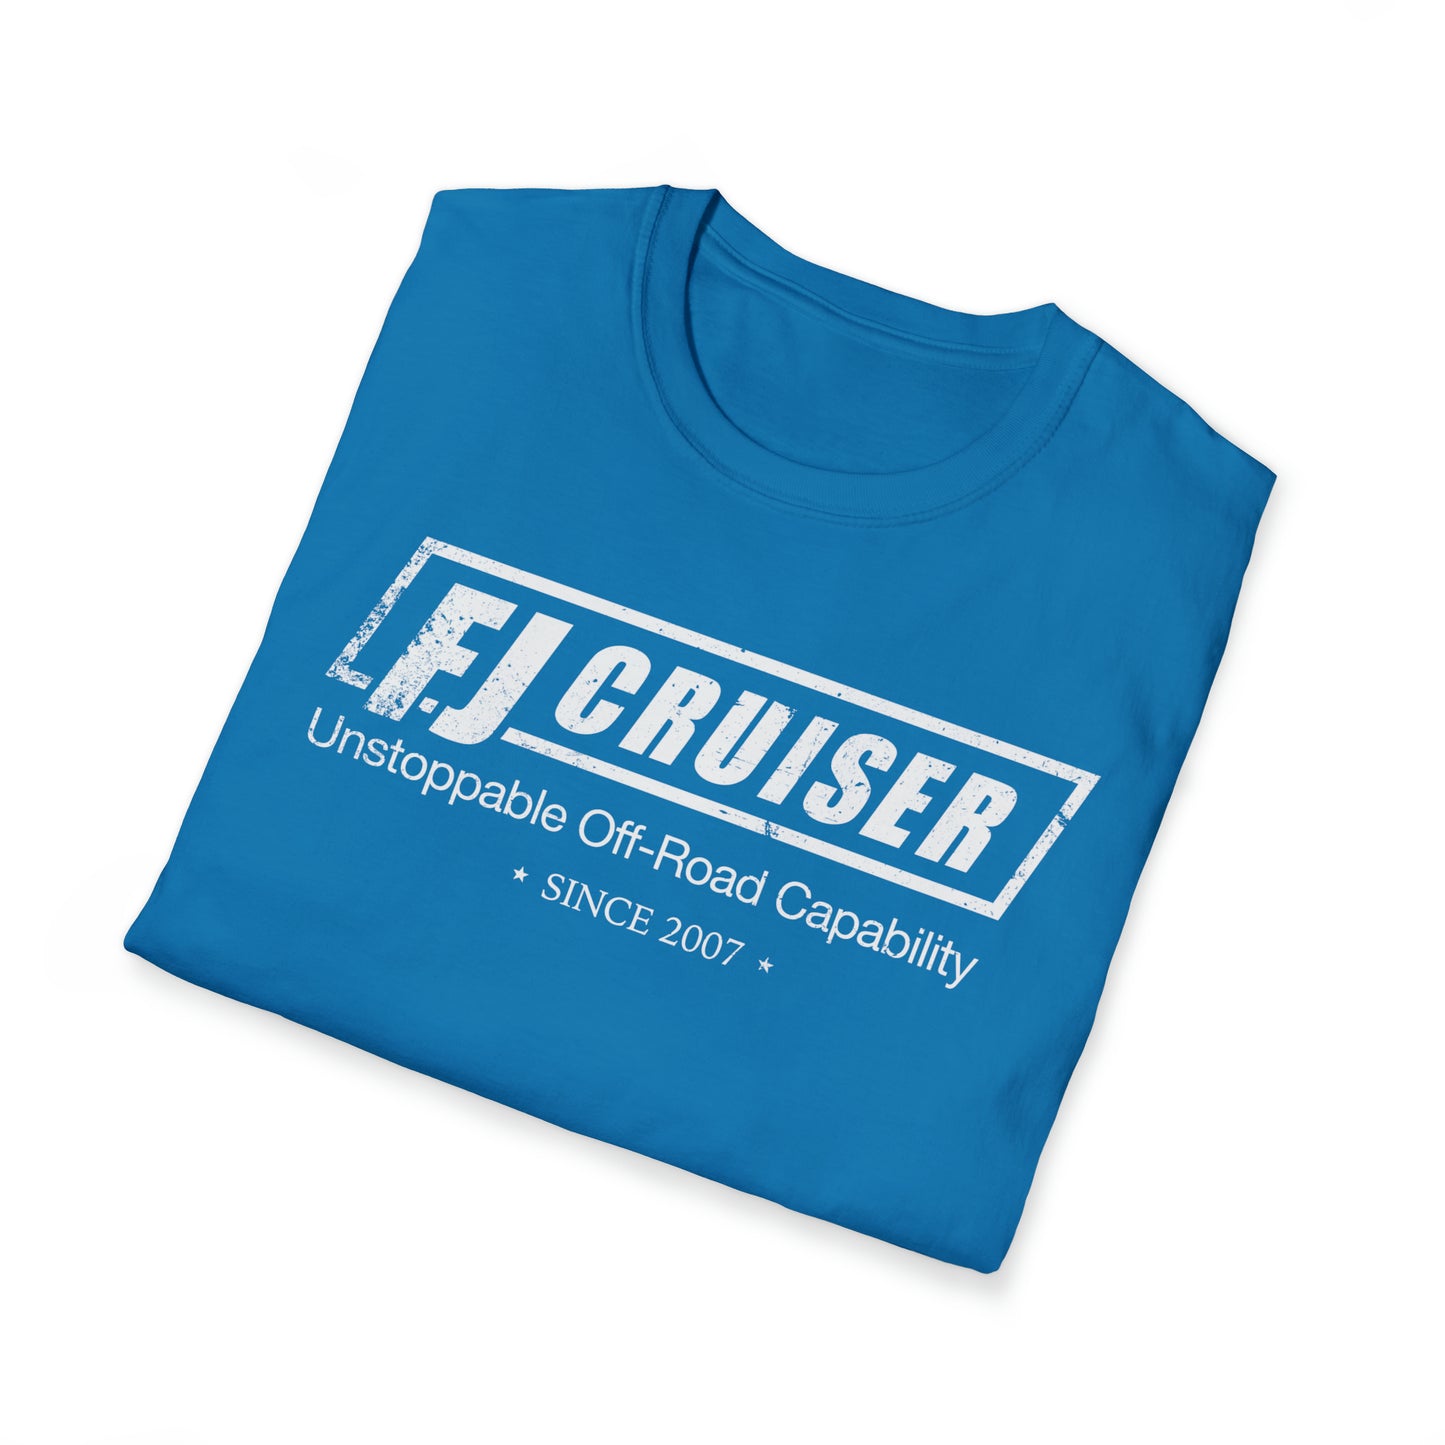 FJ Cruiser Unstoppable Off-Road capability Unisex Softstyle T-Shirt